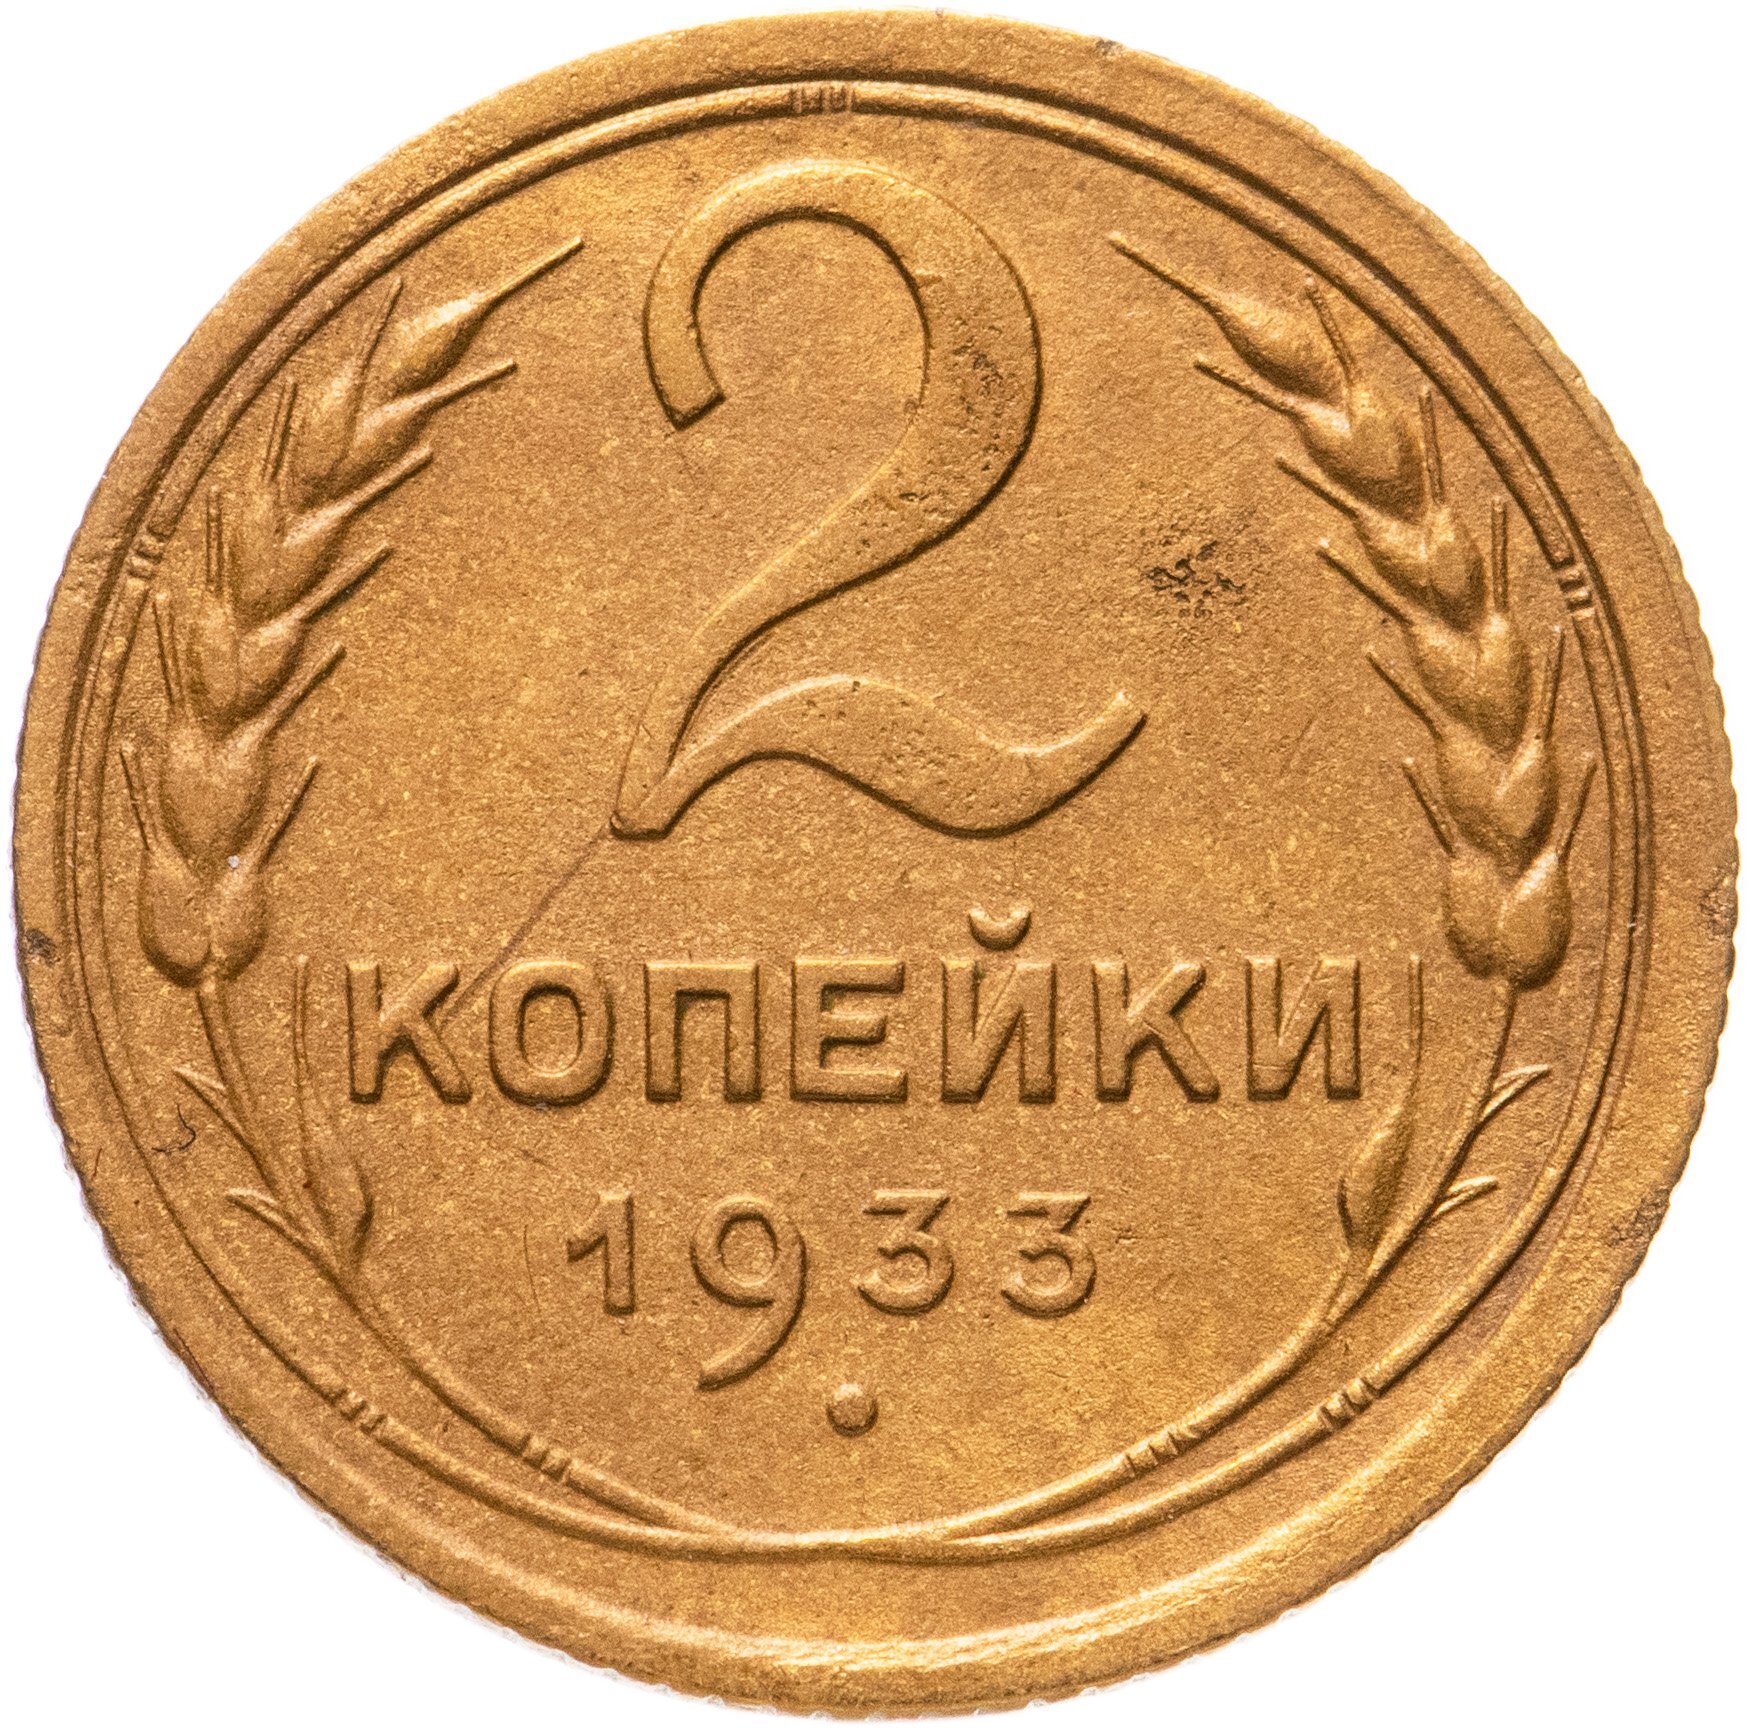 Монета 1940 года цена